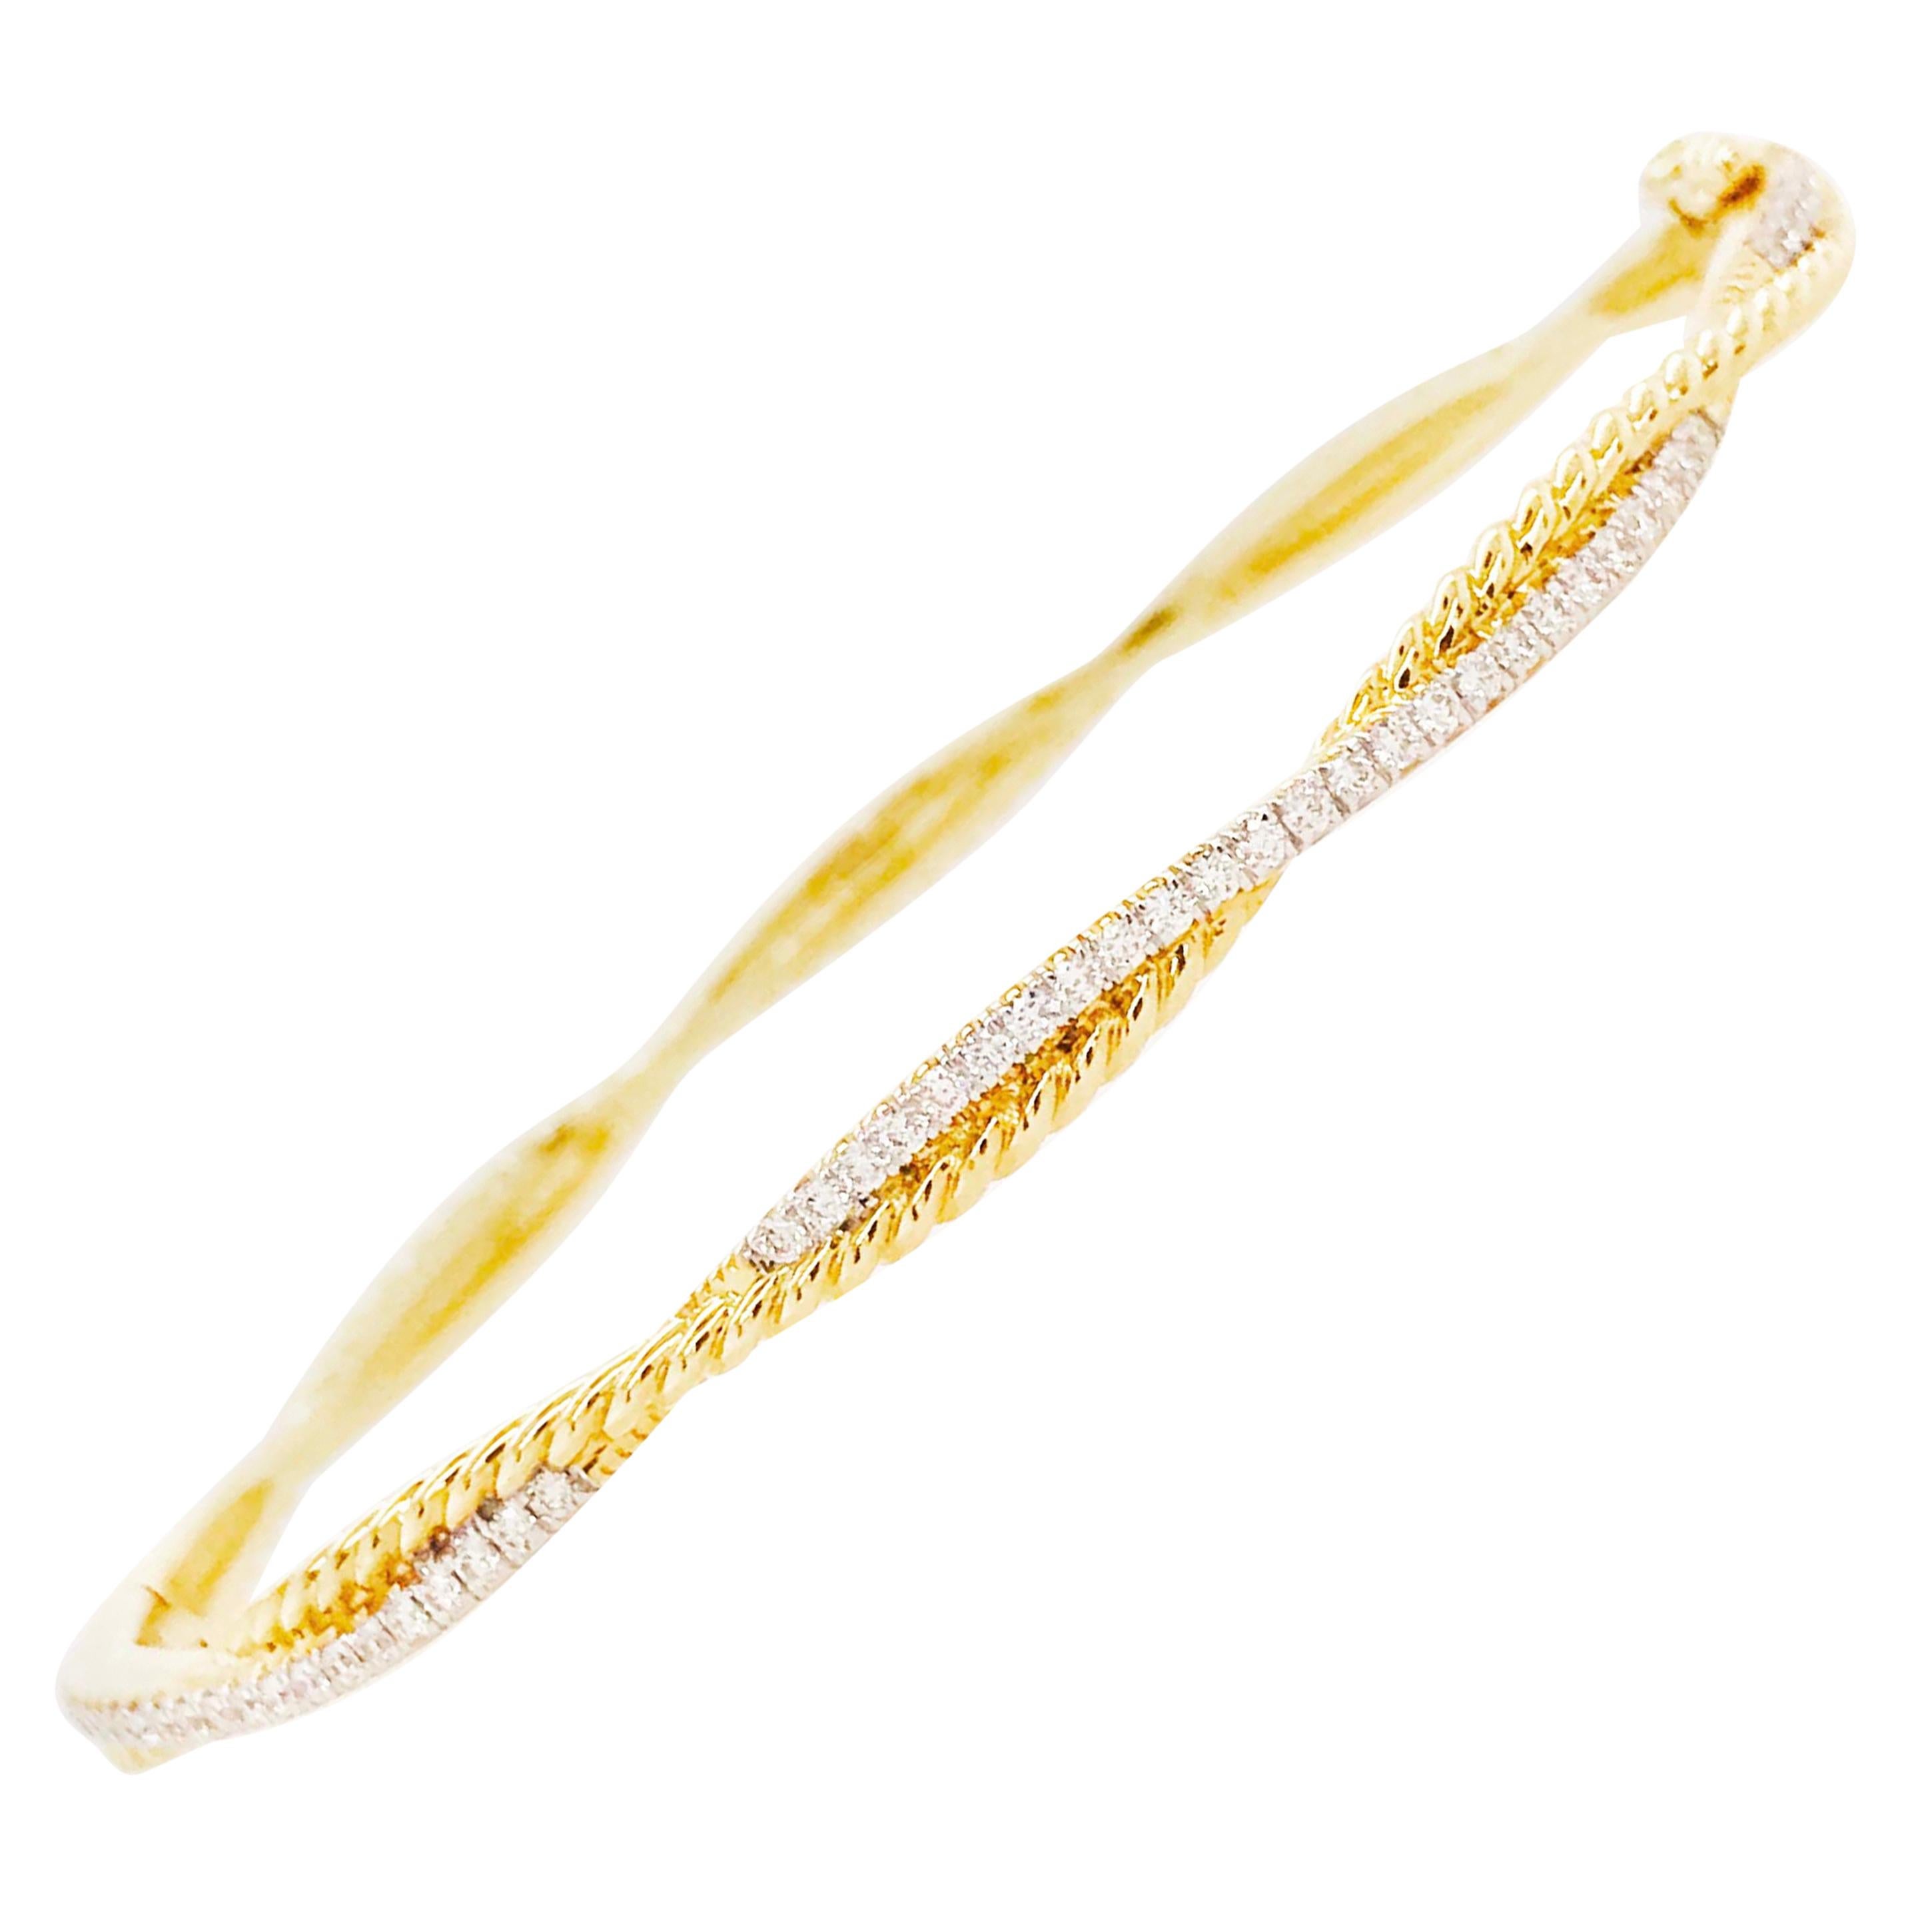 Bangle Tennis Bracelet a Twist of Diamonds and Rope Design in 14 Karat Gold